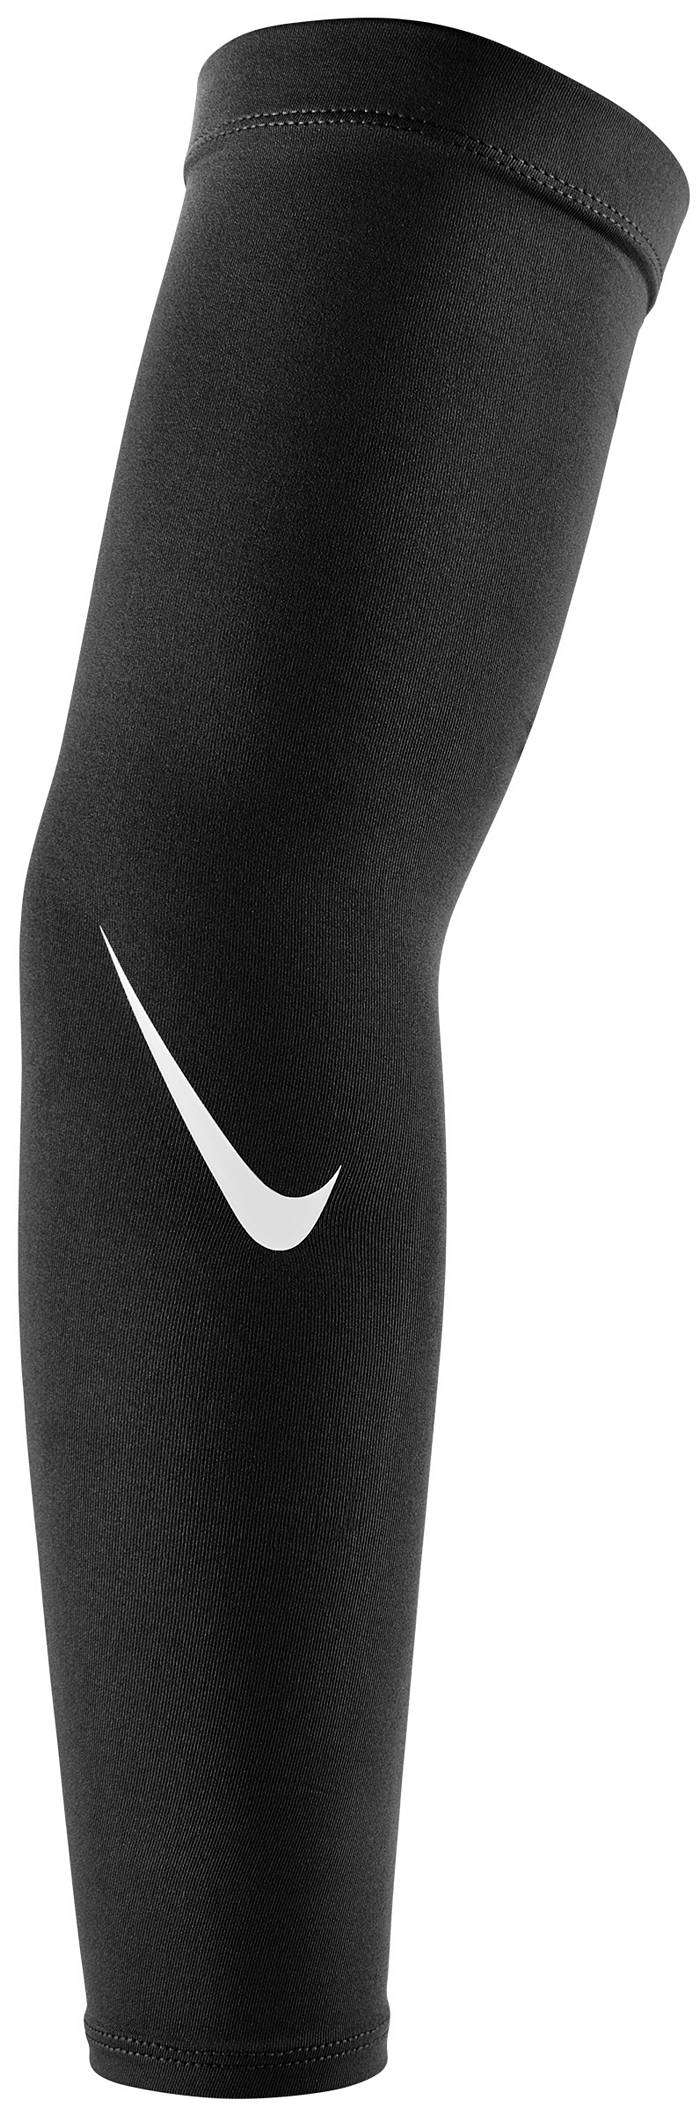 Nike Lightweight Running Sleeves (S/M,White/Silver)